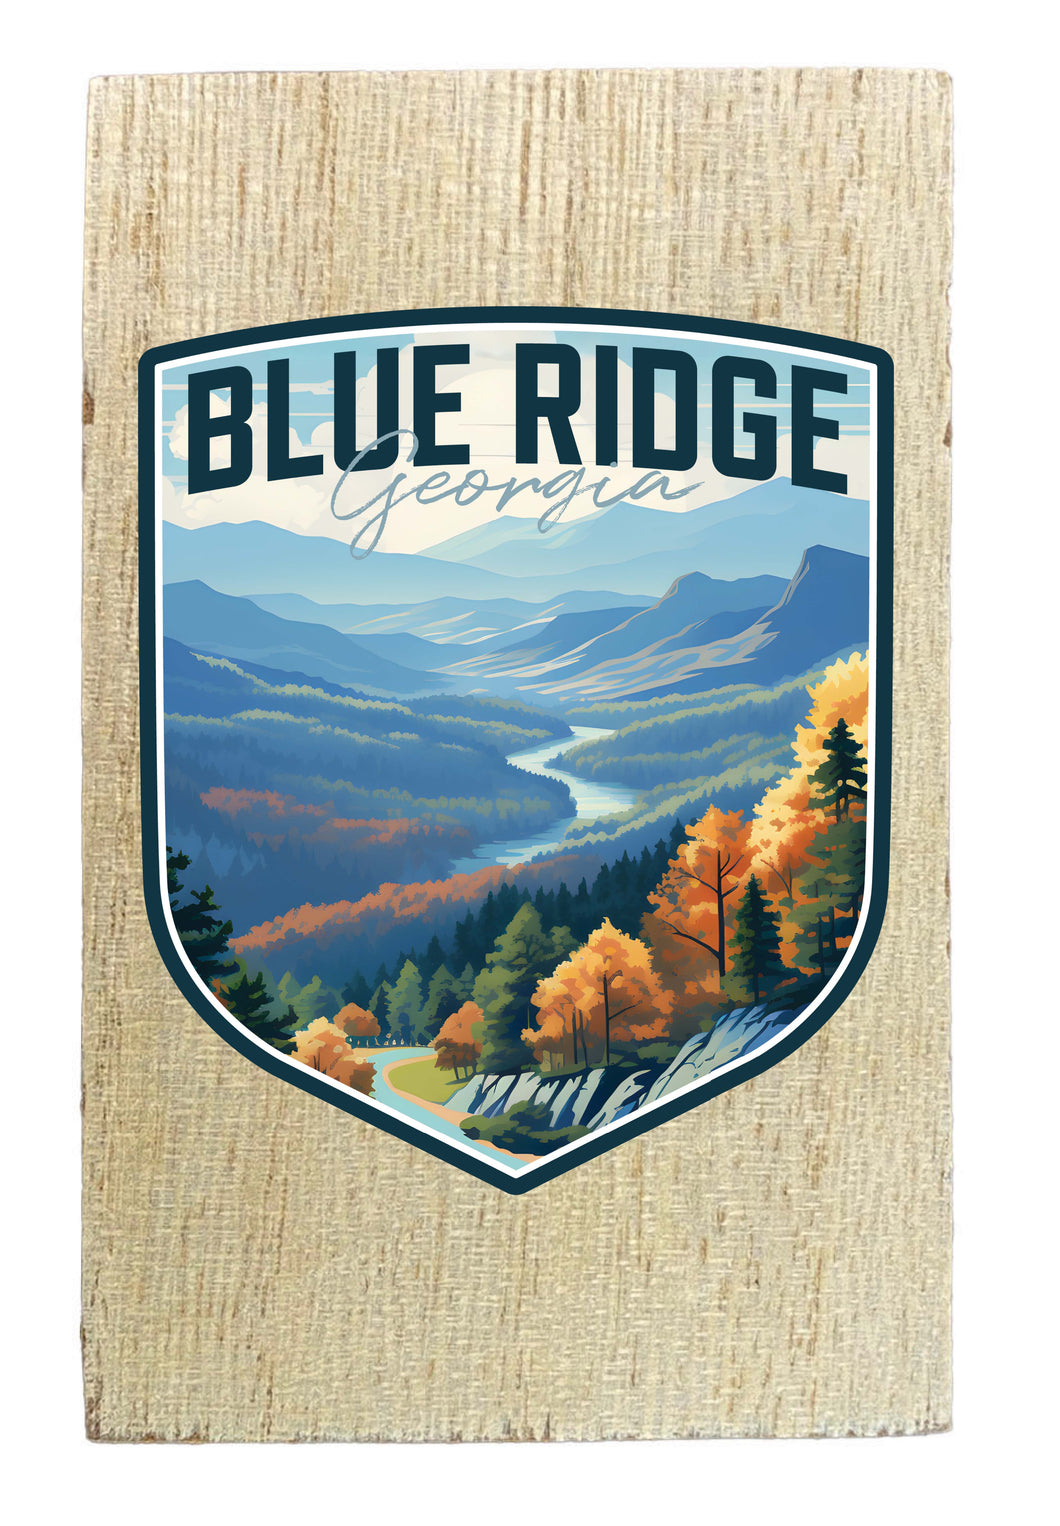 Blue Ridge Georgia Design A Souvenir Wooden 2